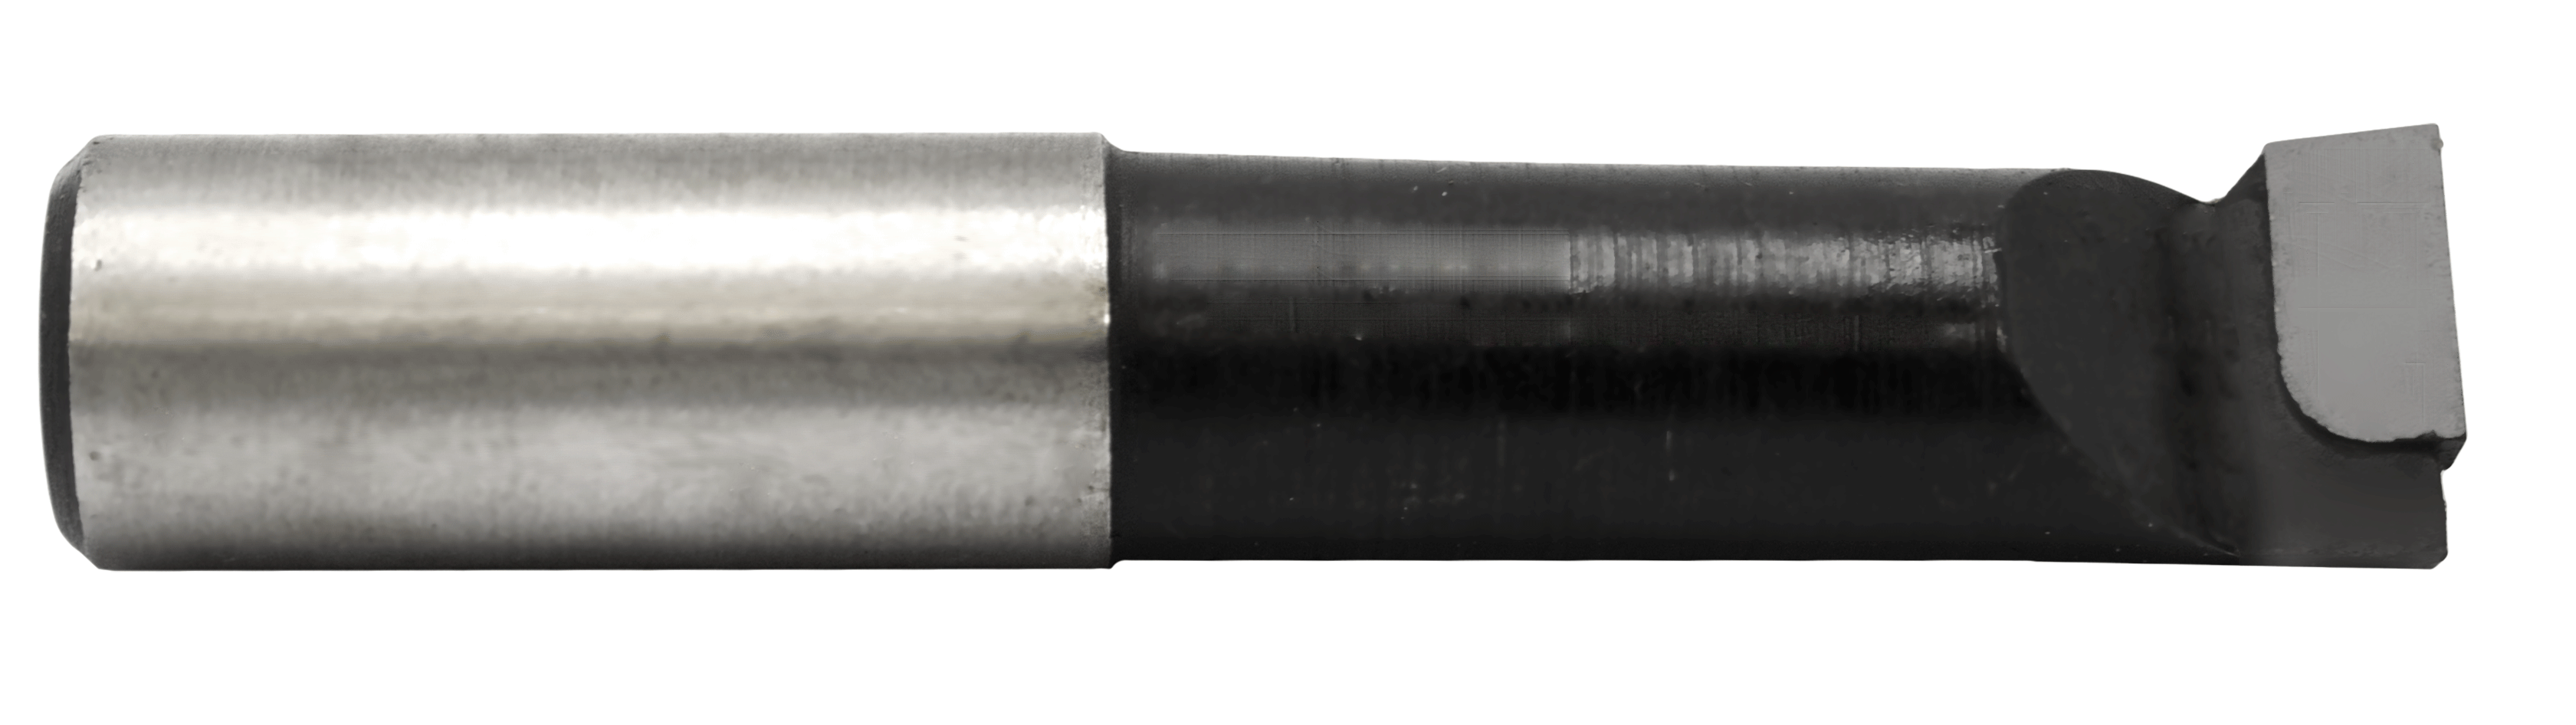 Super-Bore 10mm" C-2 for Cast Iron Applications